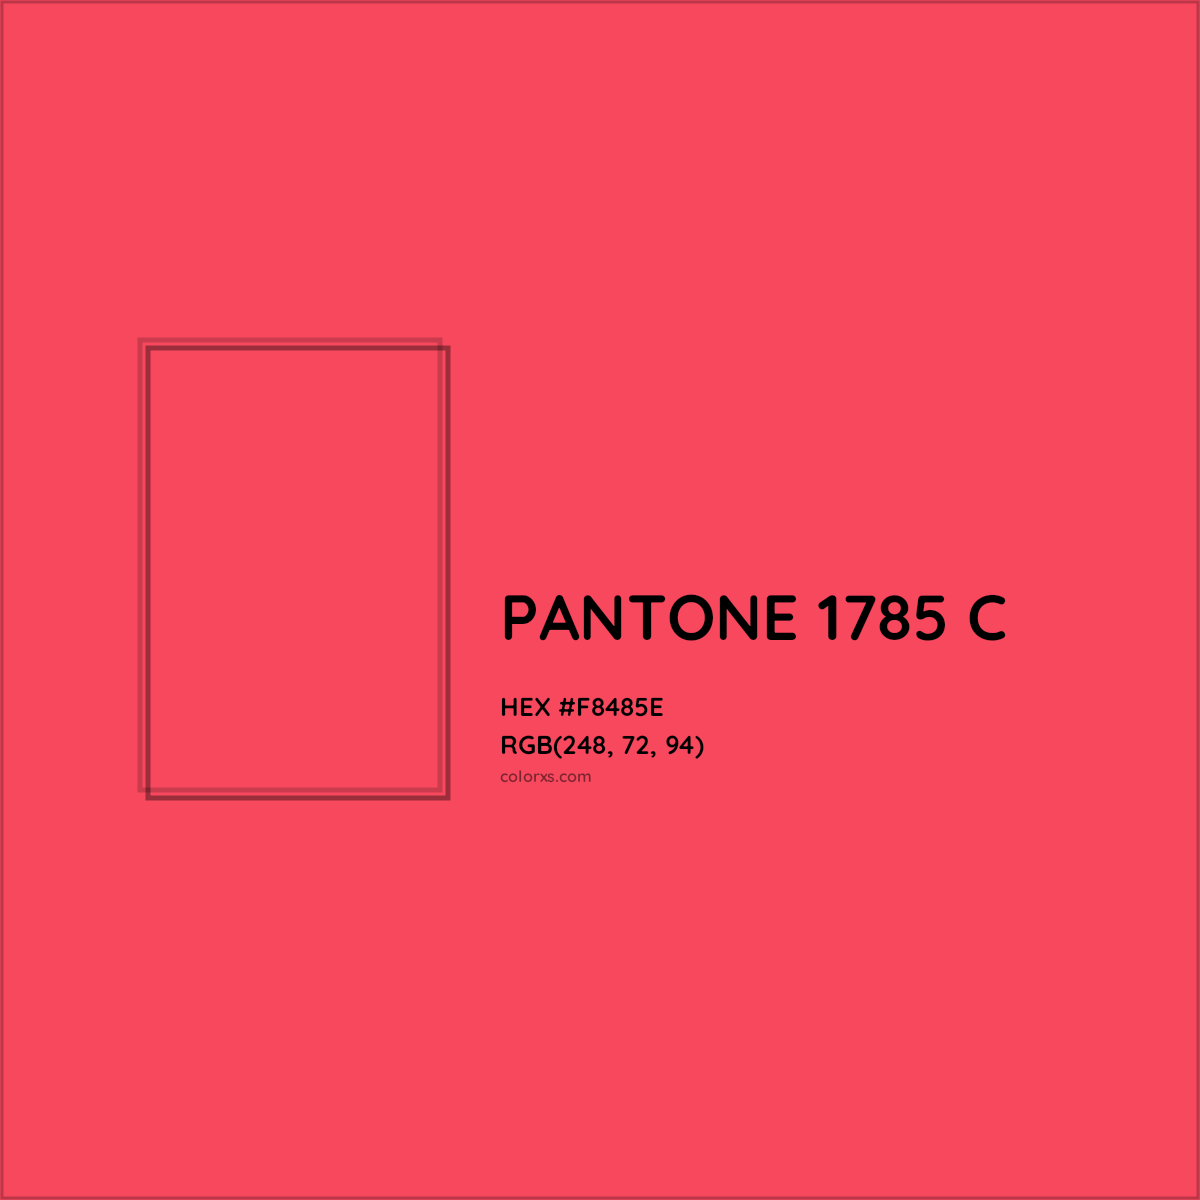 HEX #F8485E PANTONE 1785 C CMS Pantone PMS - Color Code